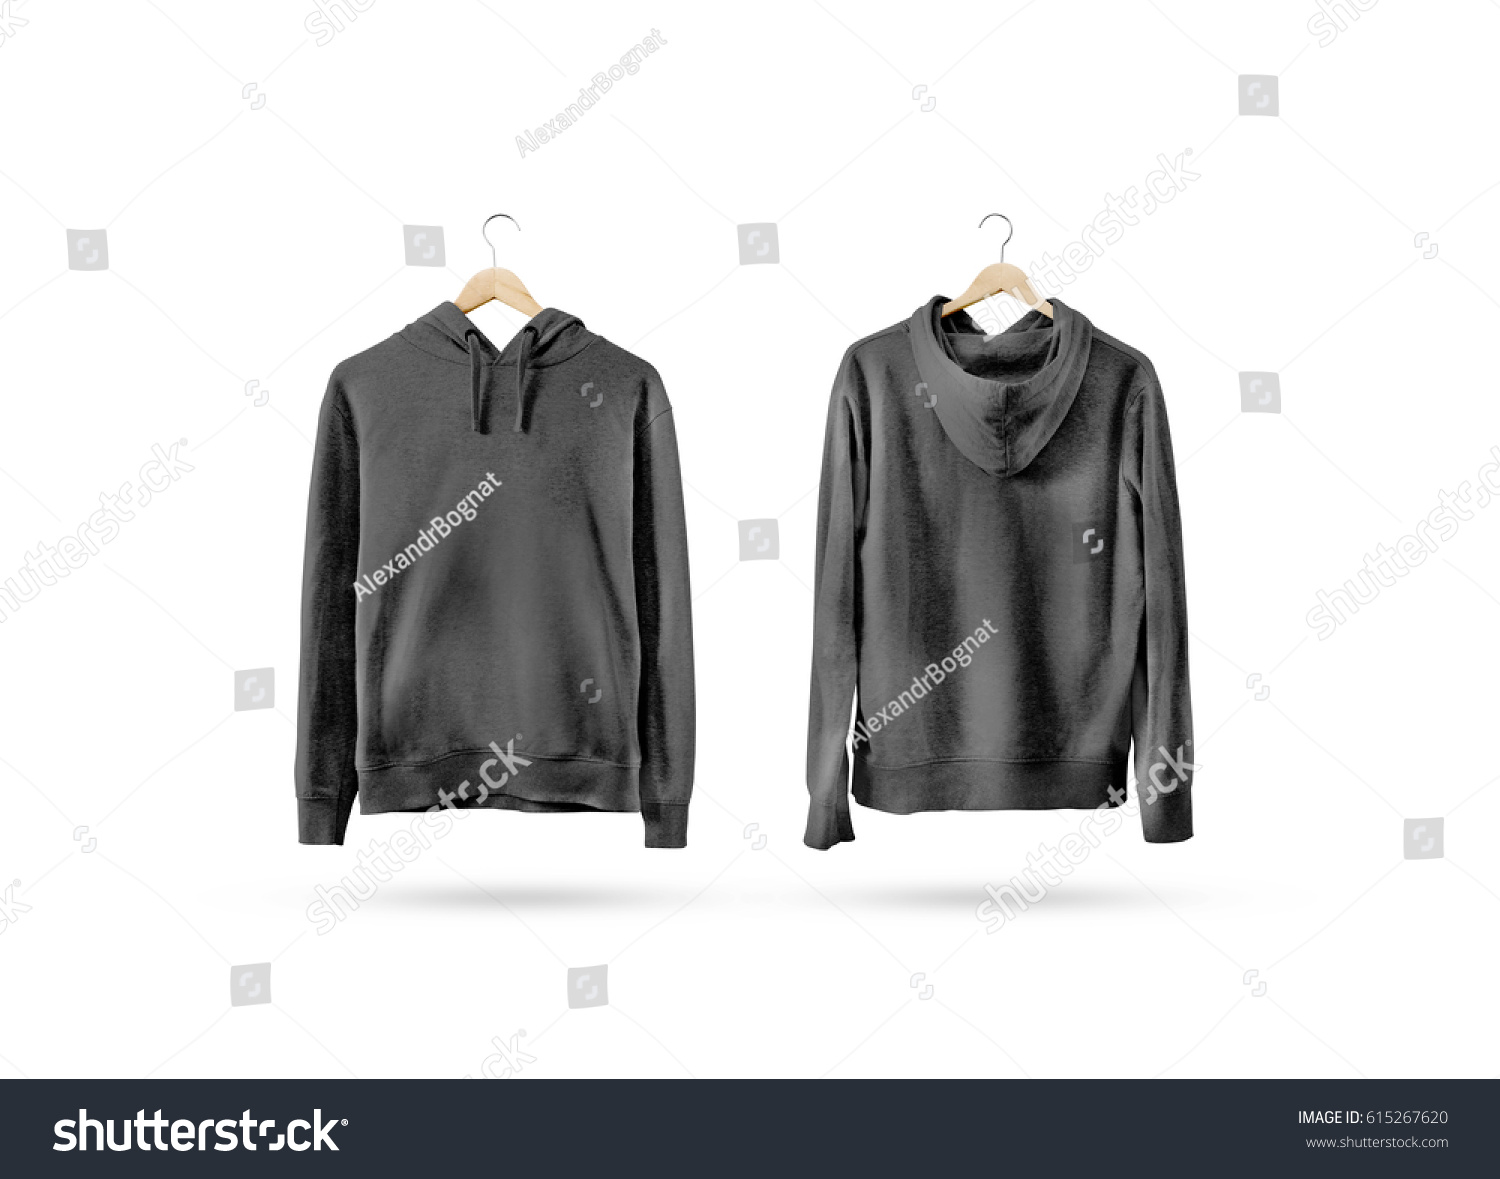 Download Blank Black Sweatshirt Mockup Set Hanging Stock Photo 615267620 - Shutterstock